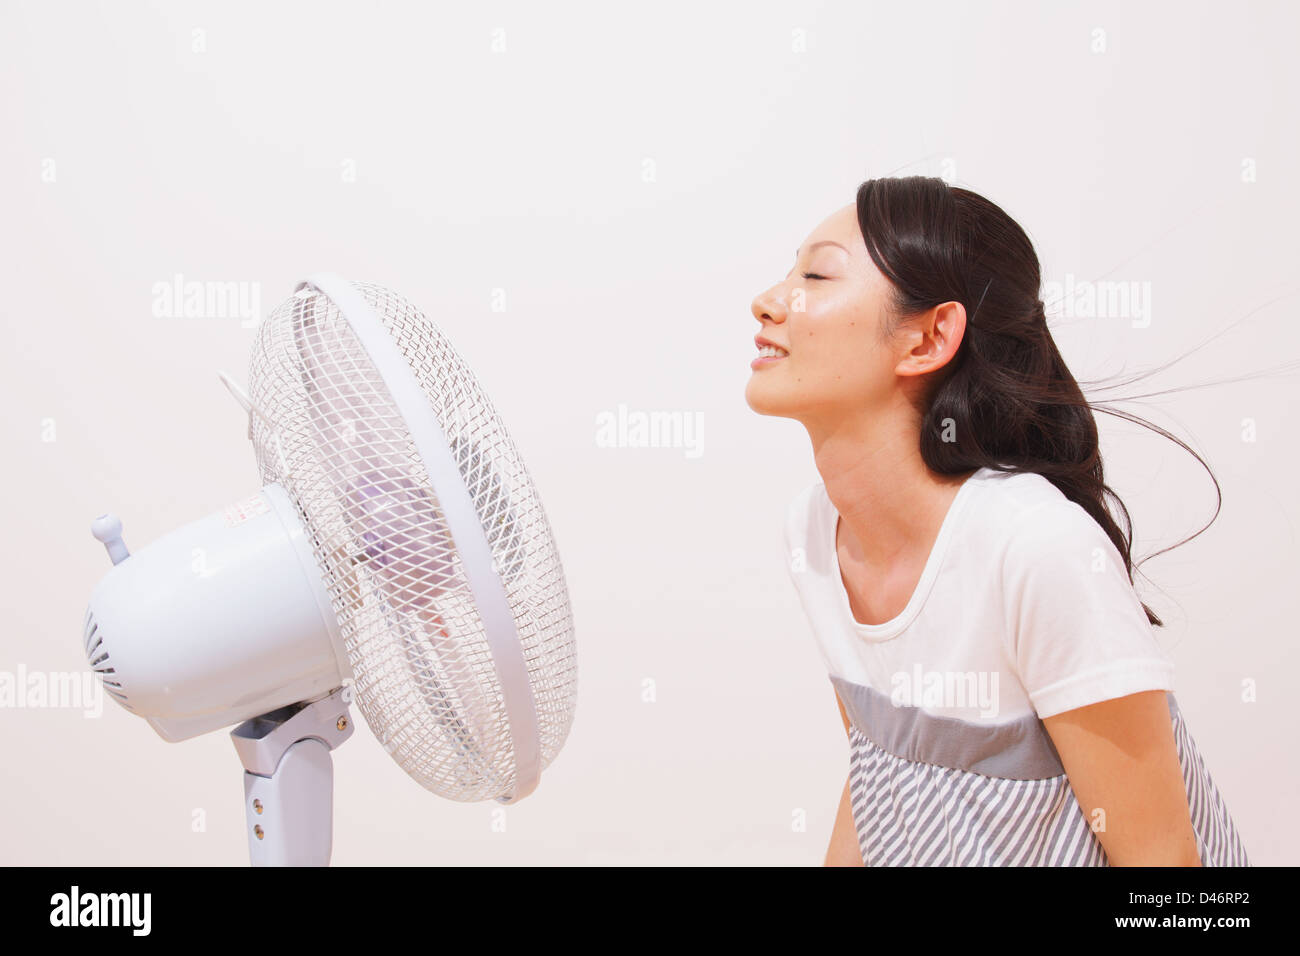 https://c8.alamy.com/comp/D46RP2/woman-cooling-down-with-a-fan-D46RP2.jpg